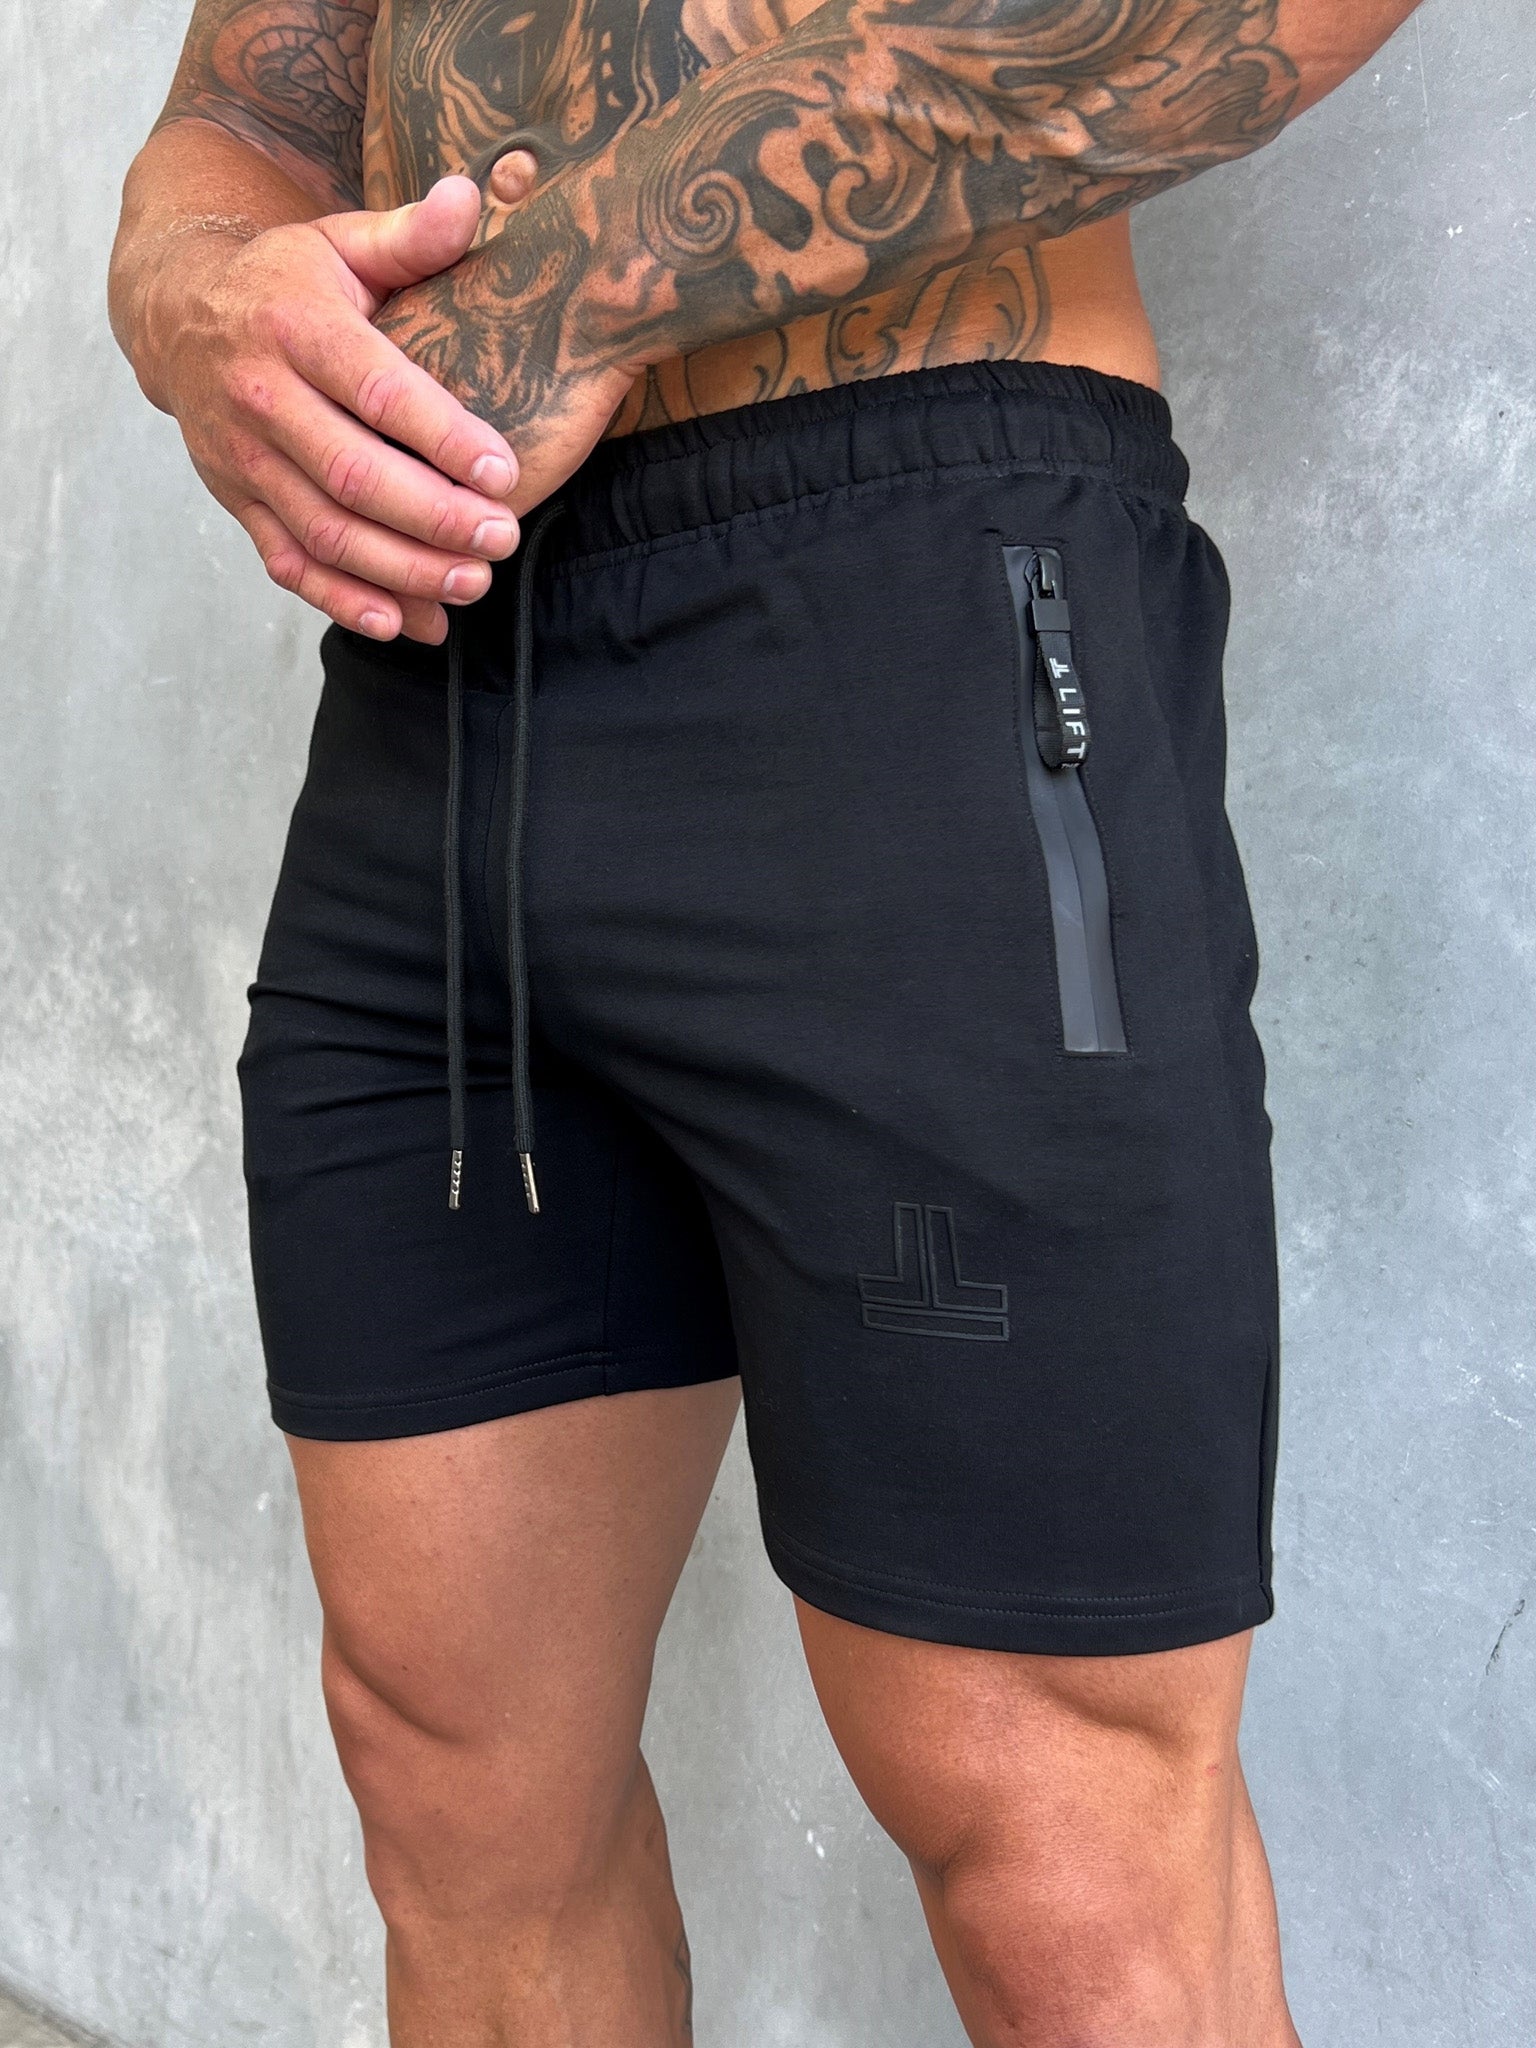 End Fit Tapered Shorts - Black / Black